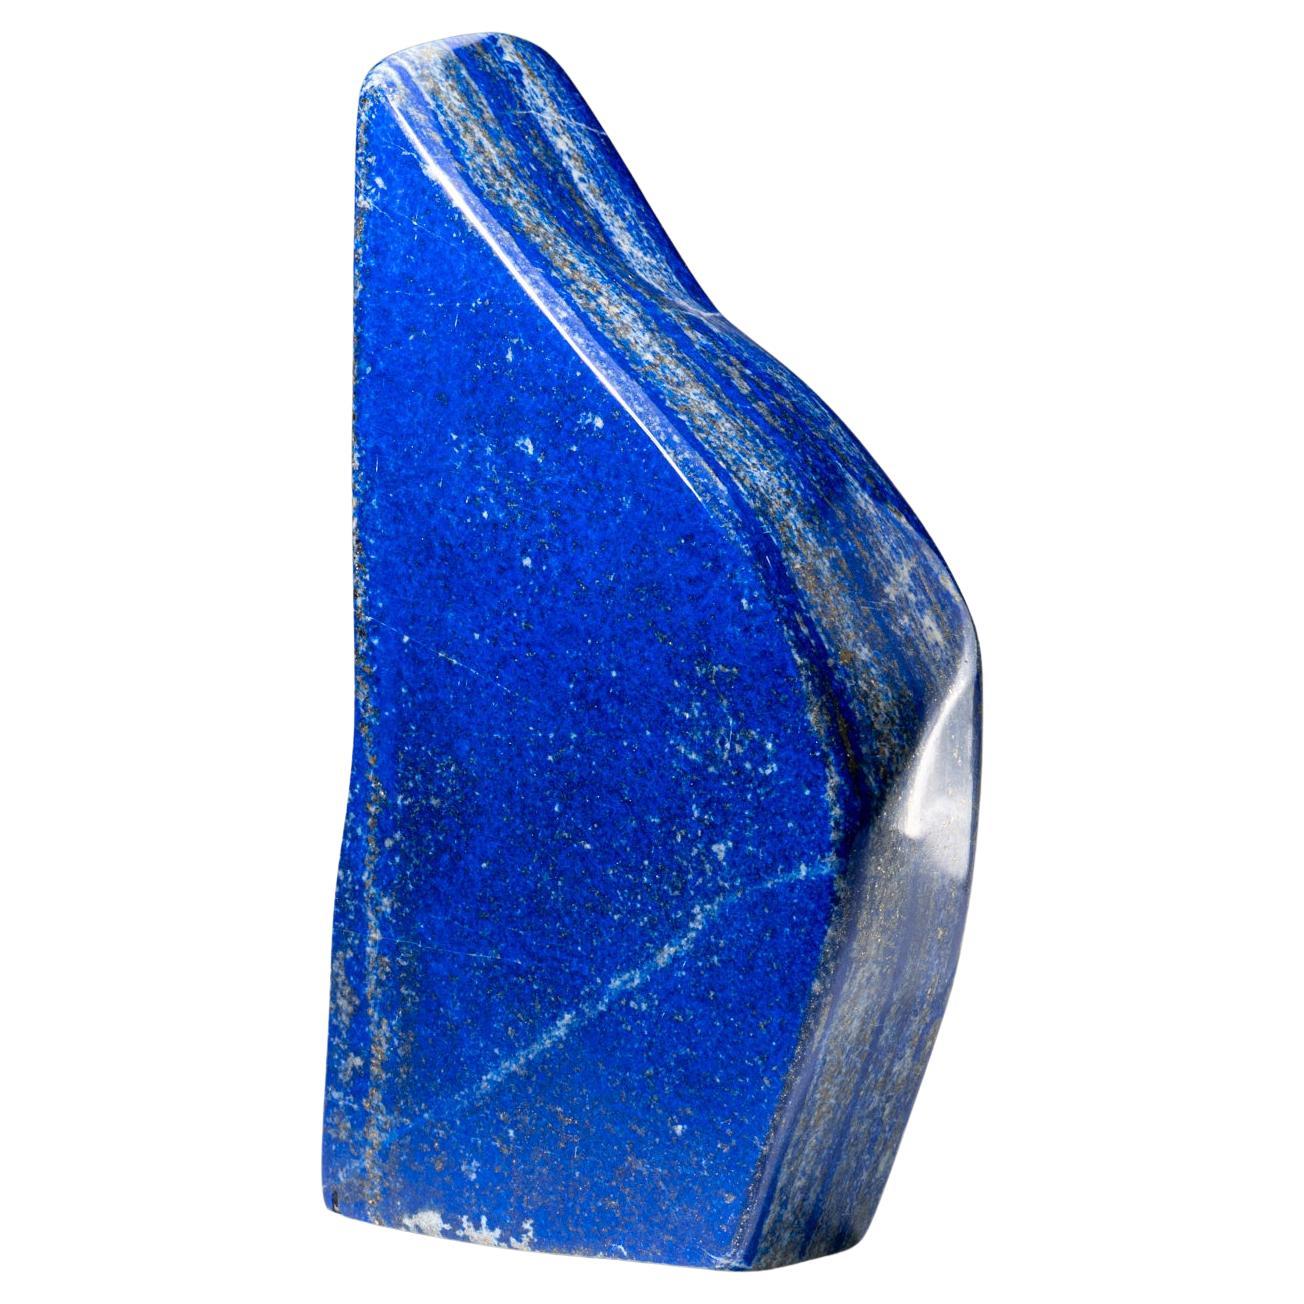 Genuine Polished Lapis Lazuli Freeform from Afghanistan '4 lbs'